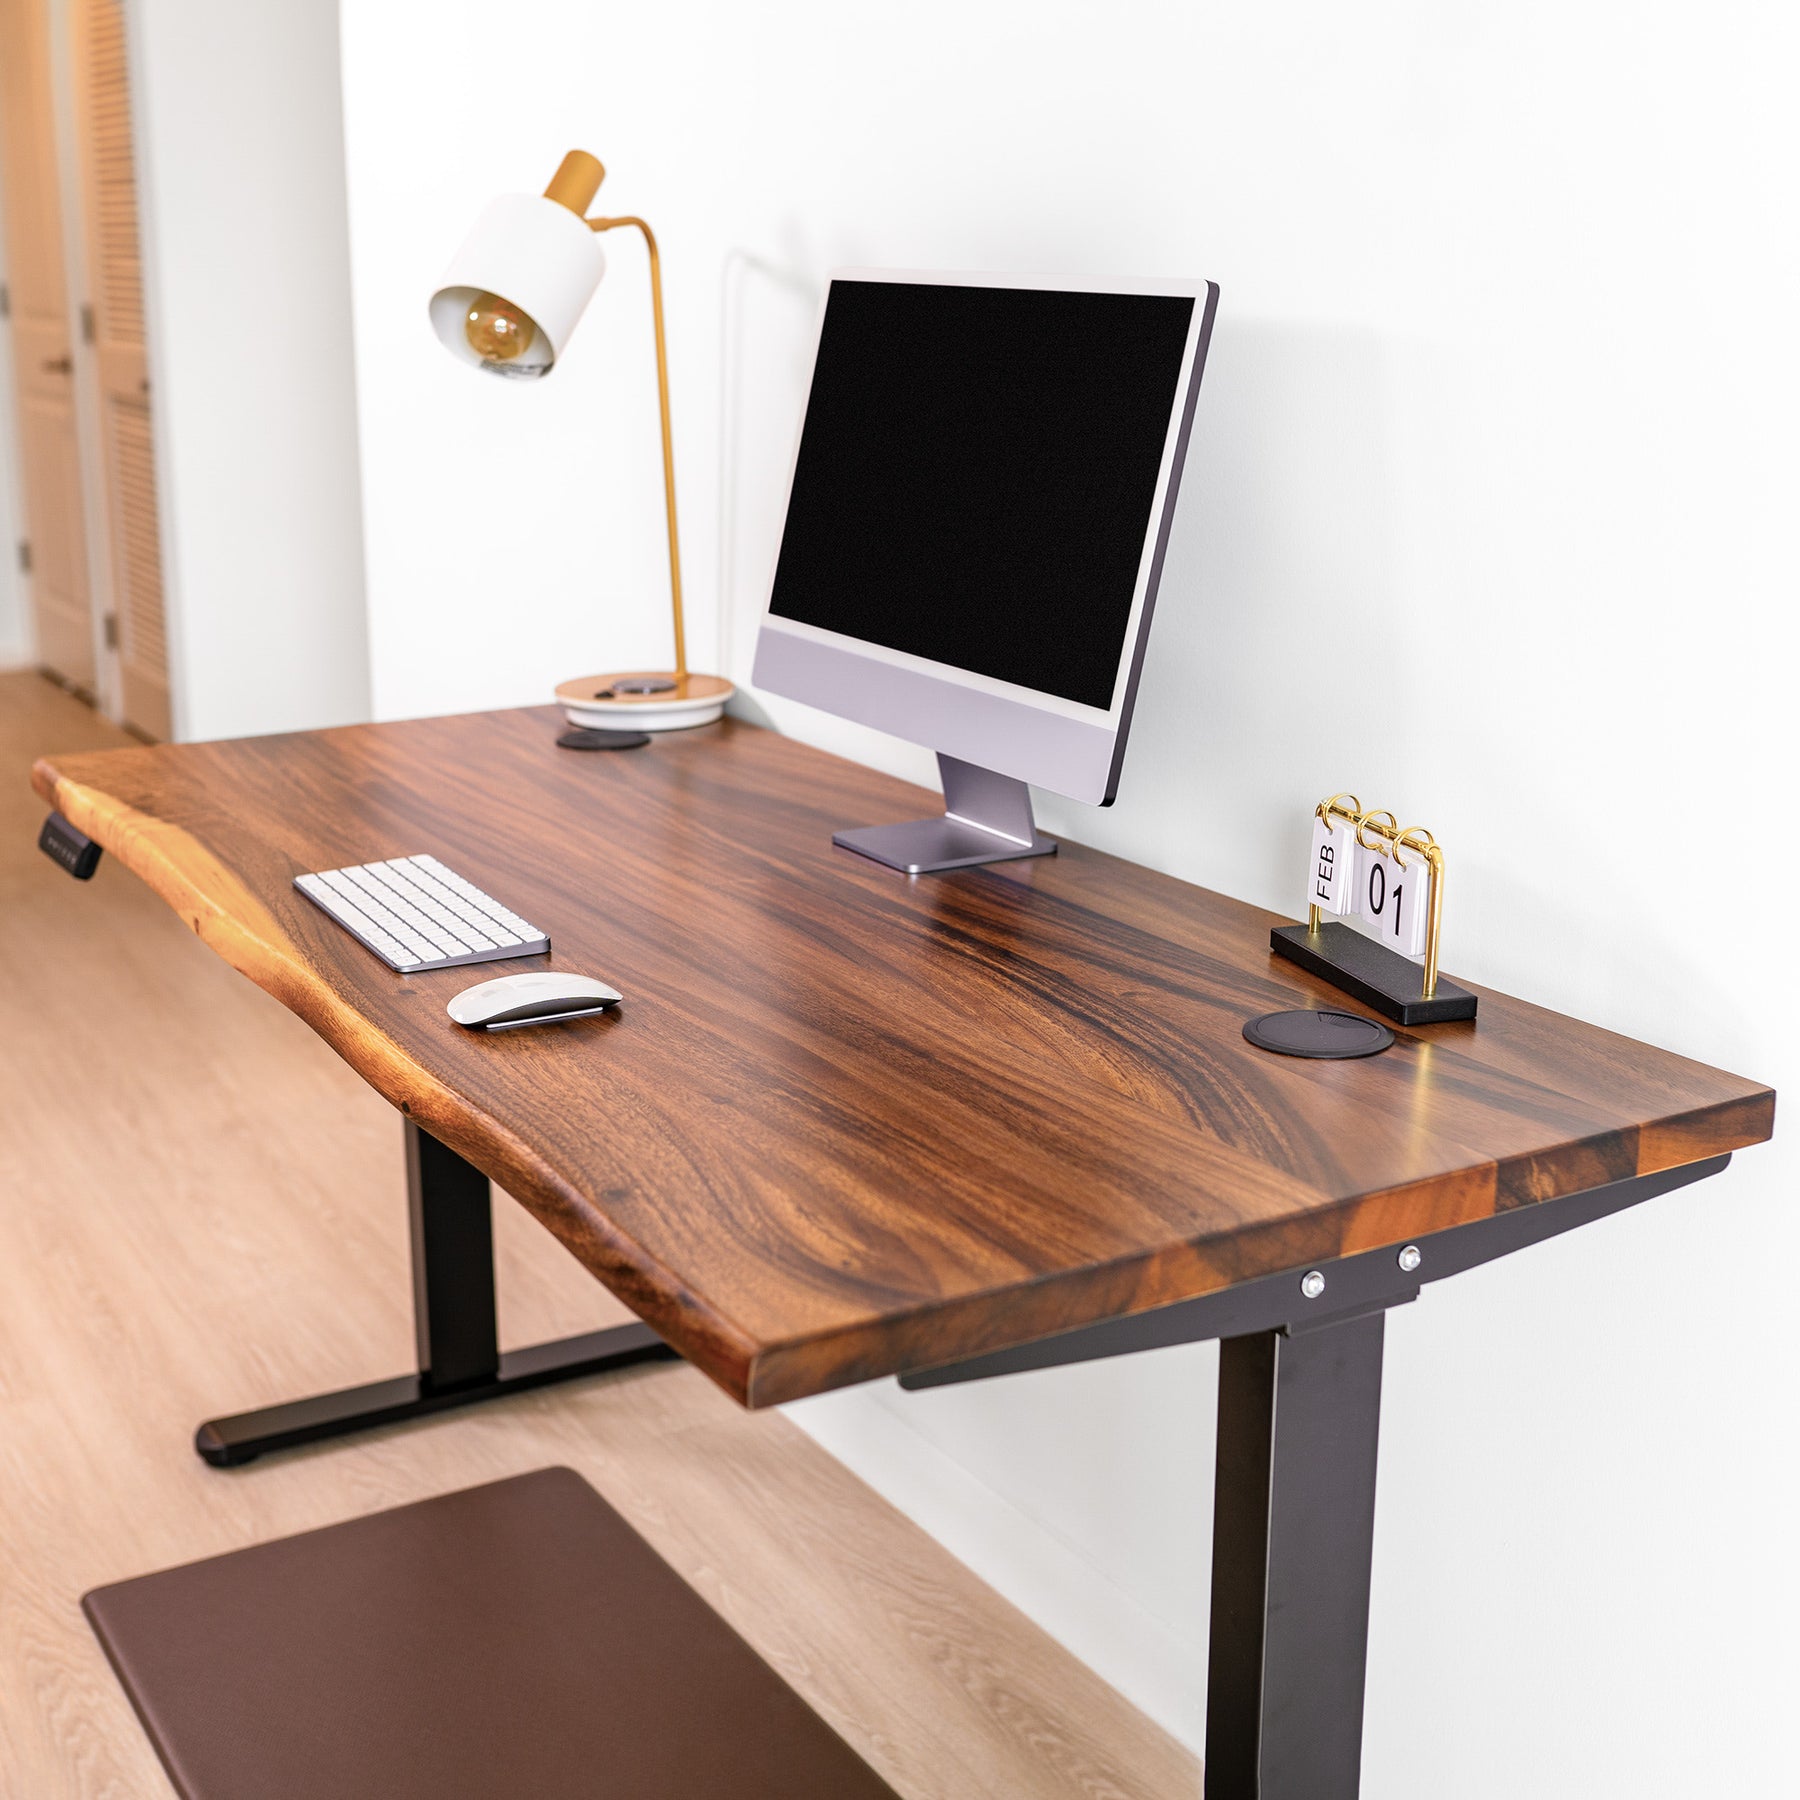 Standing Desk - Walnut Solid Wood Adjustable Height Desk